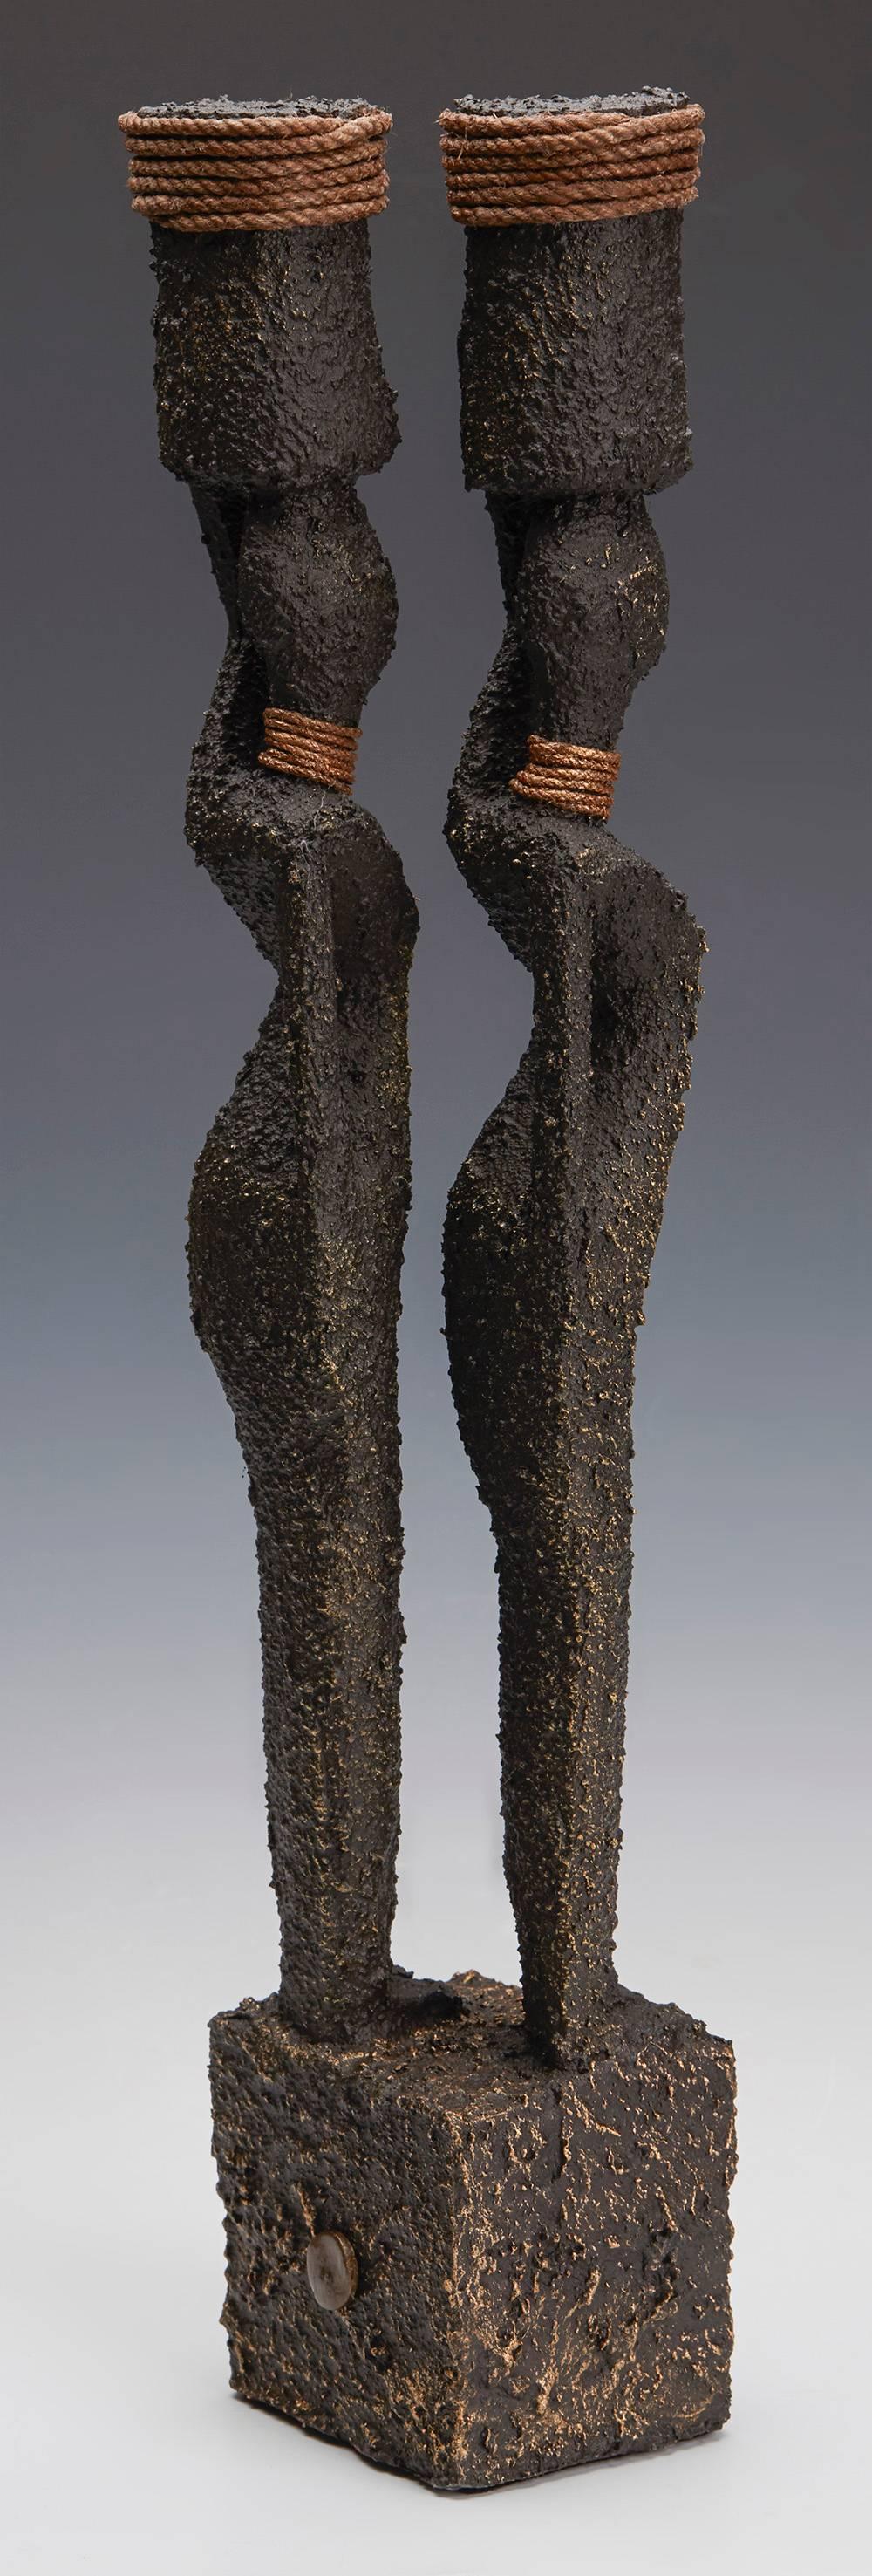 ‘Elide’ Original Sculpture by Annie Marsters, 2015 1